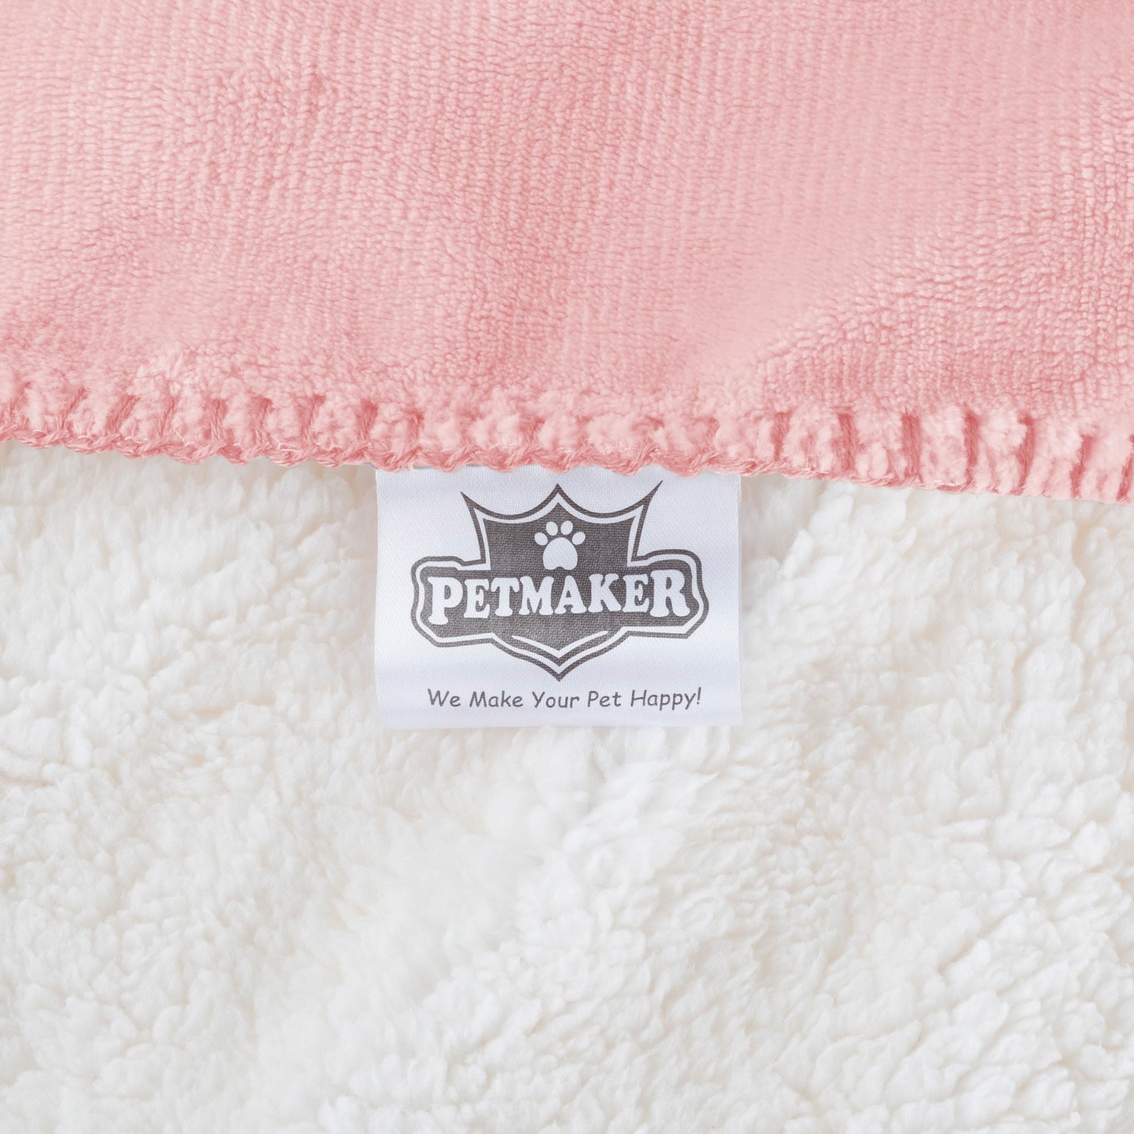 Petmaker Waterproof Soft Plush Throw Pet Blanket 50 x 60 in. - Image 6 of 8